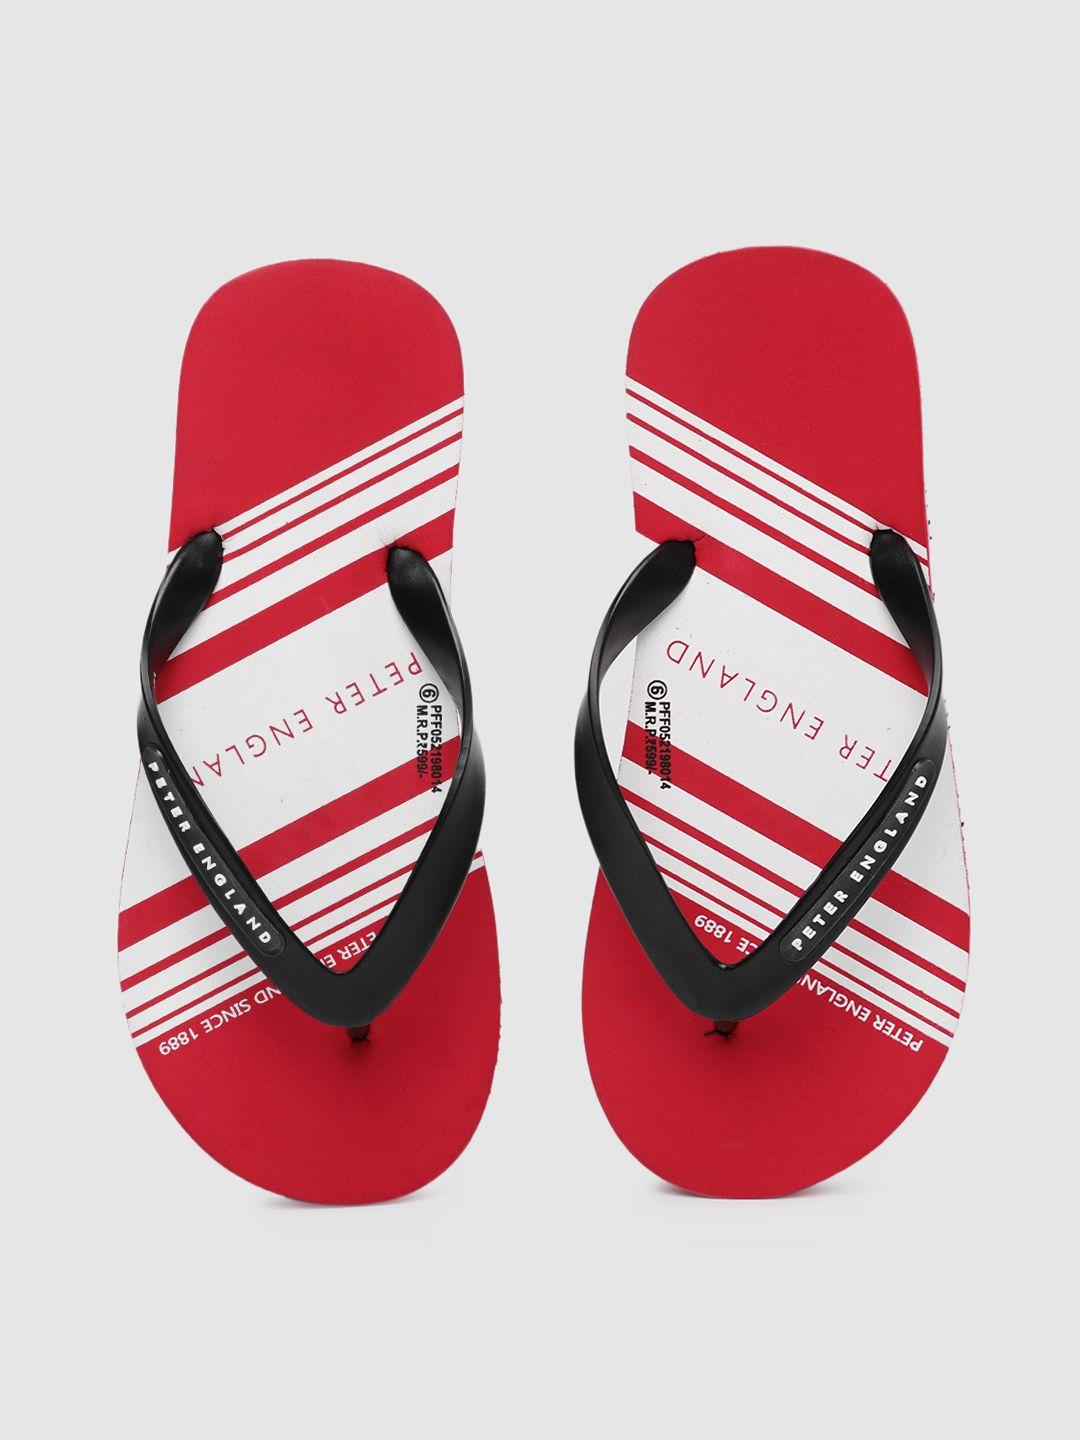 peter england men red & white brand logo printed rubber thong flip-flops